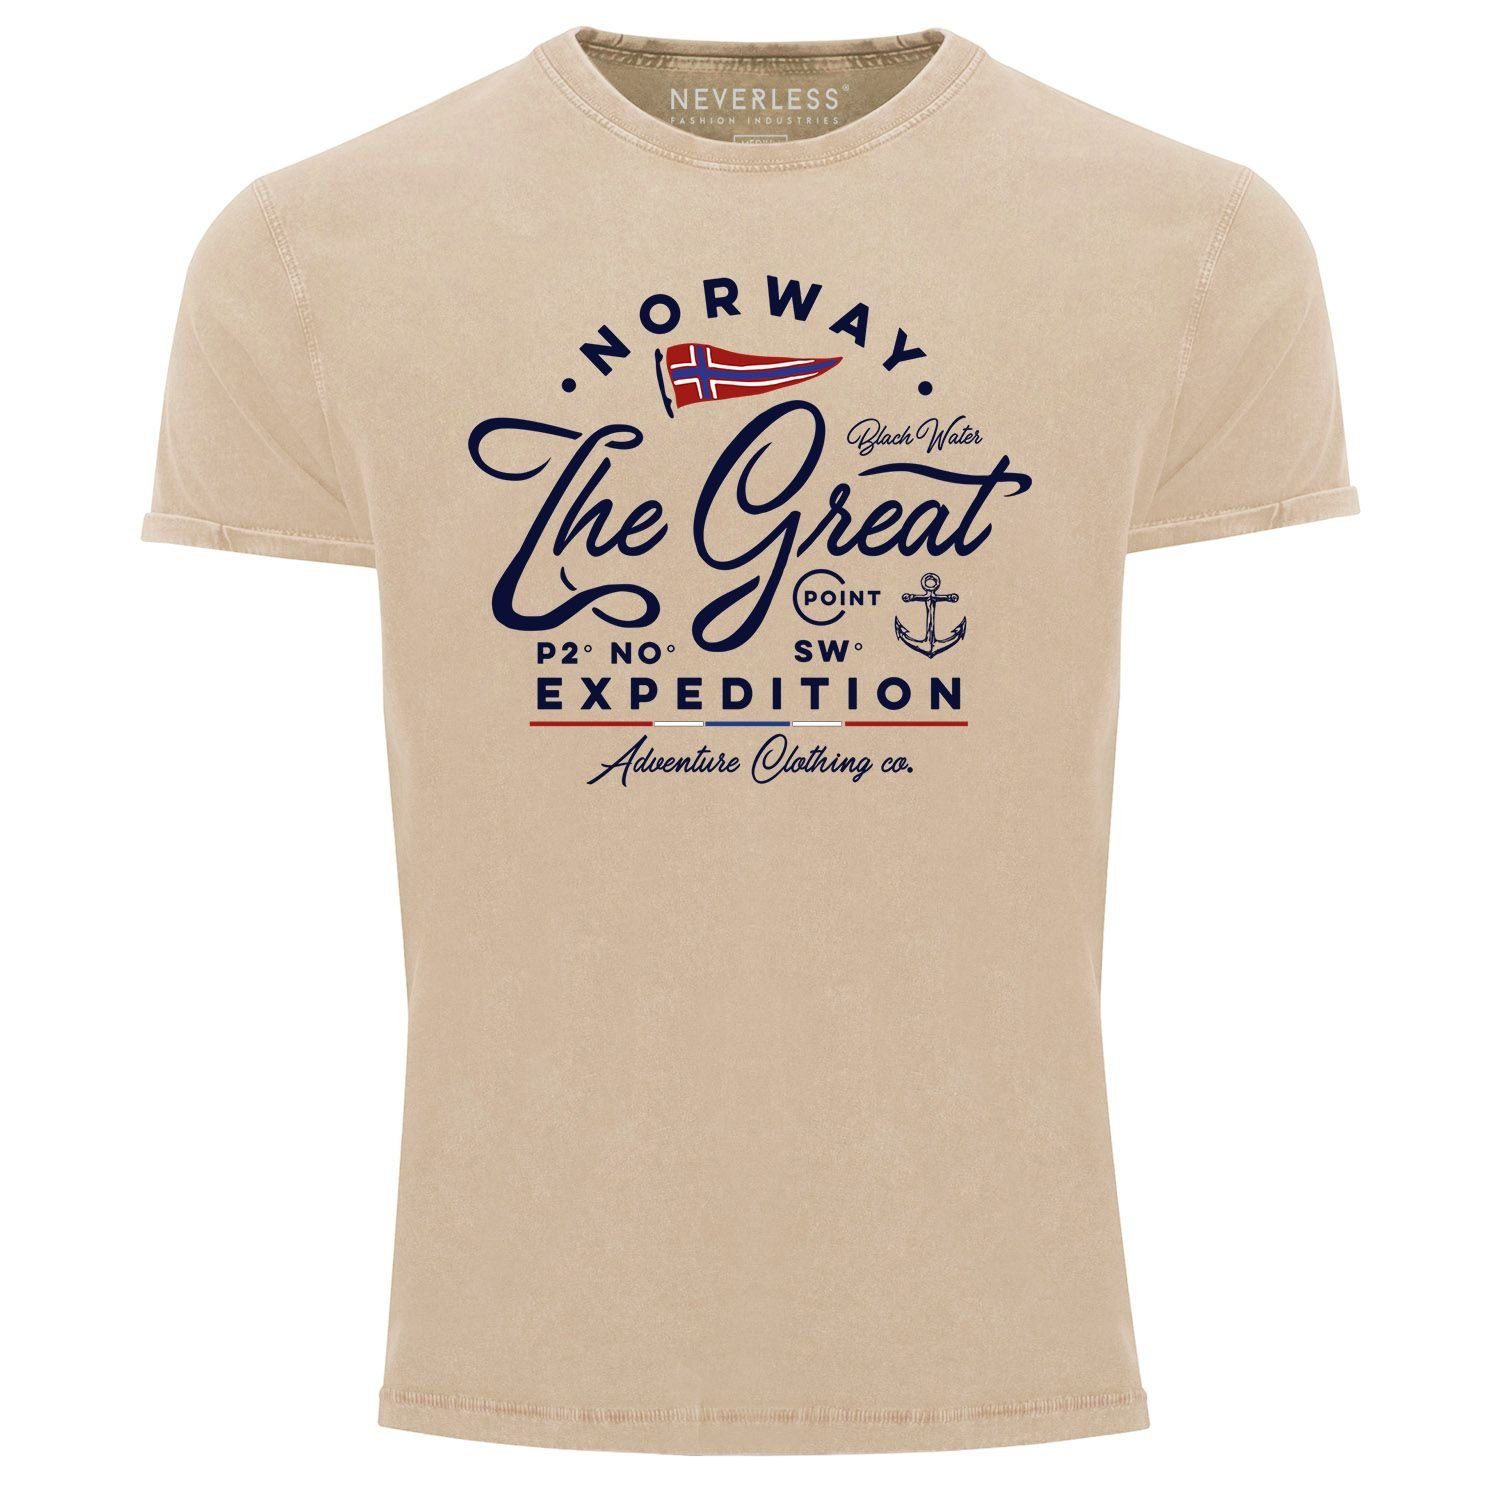 Neverless Print-Shirt Herren Vintage Shirt Norwegen The Great Expedition Outdoor Adventure Printshirt T-Shirt Aufdruck Used Look Neverless® mit Print